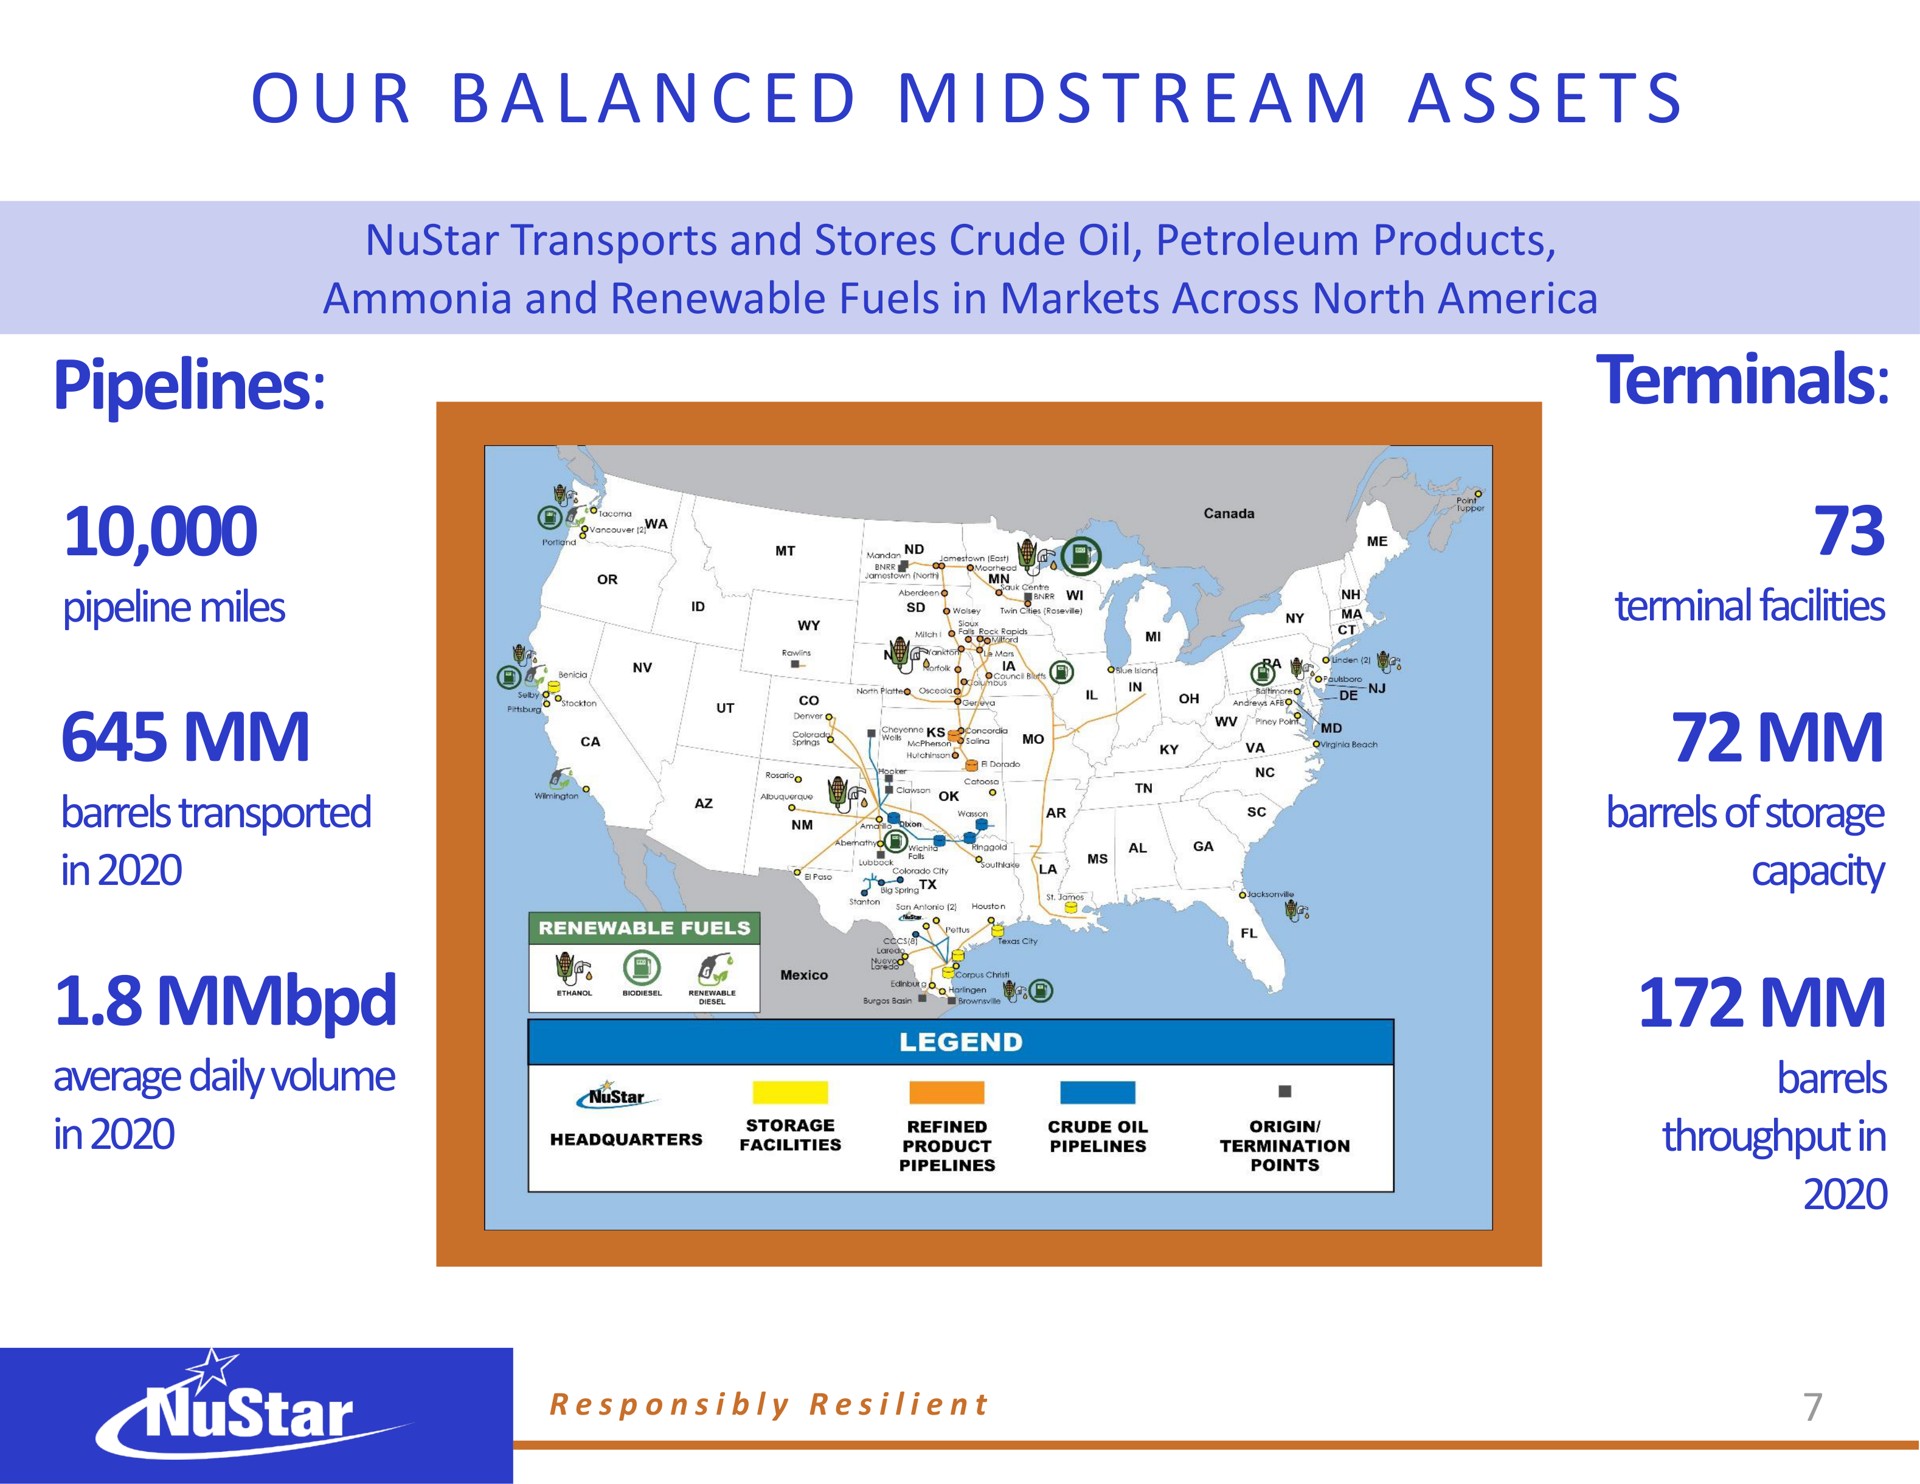 a a i a a pipelines terminals our balanced midstream assets cit | NuStar Energy